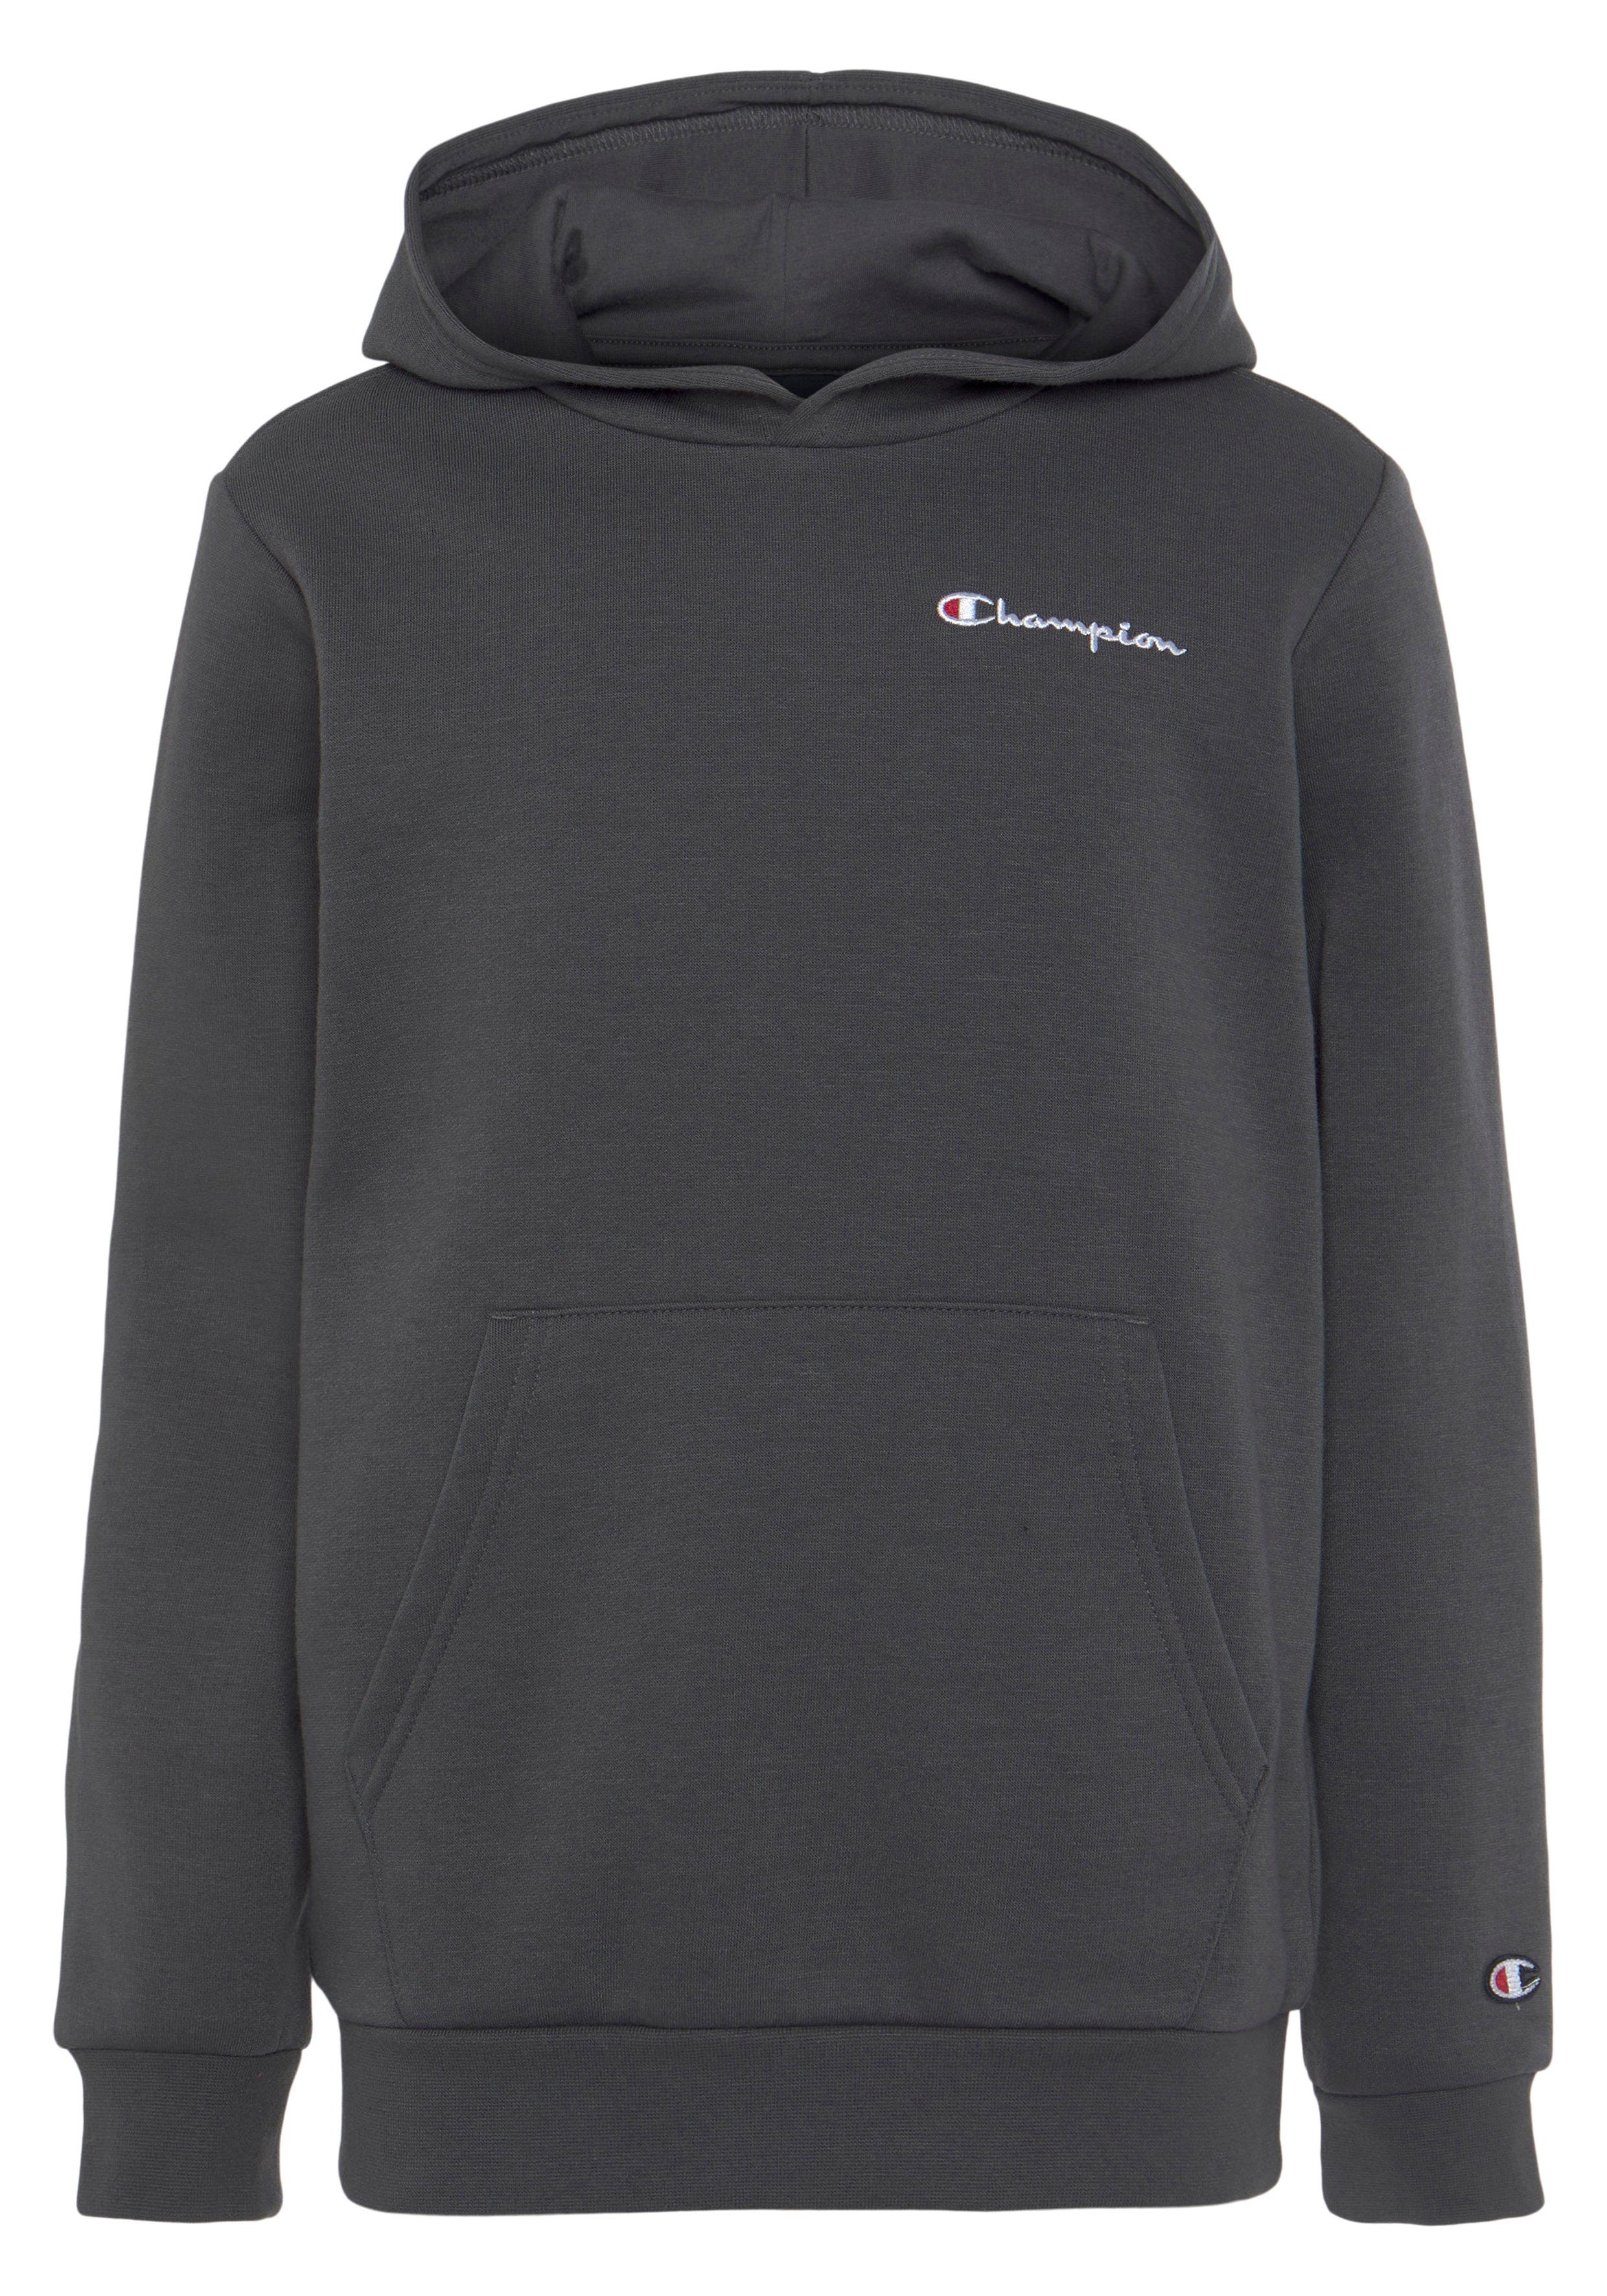 grau Kinder Sweatshirt - Hooded Classic Logo Sweatshirt Champion für small